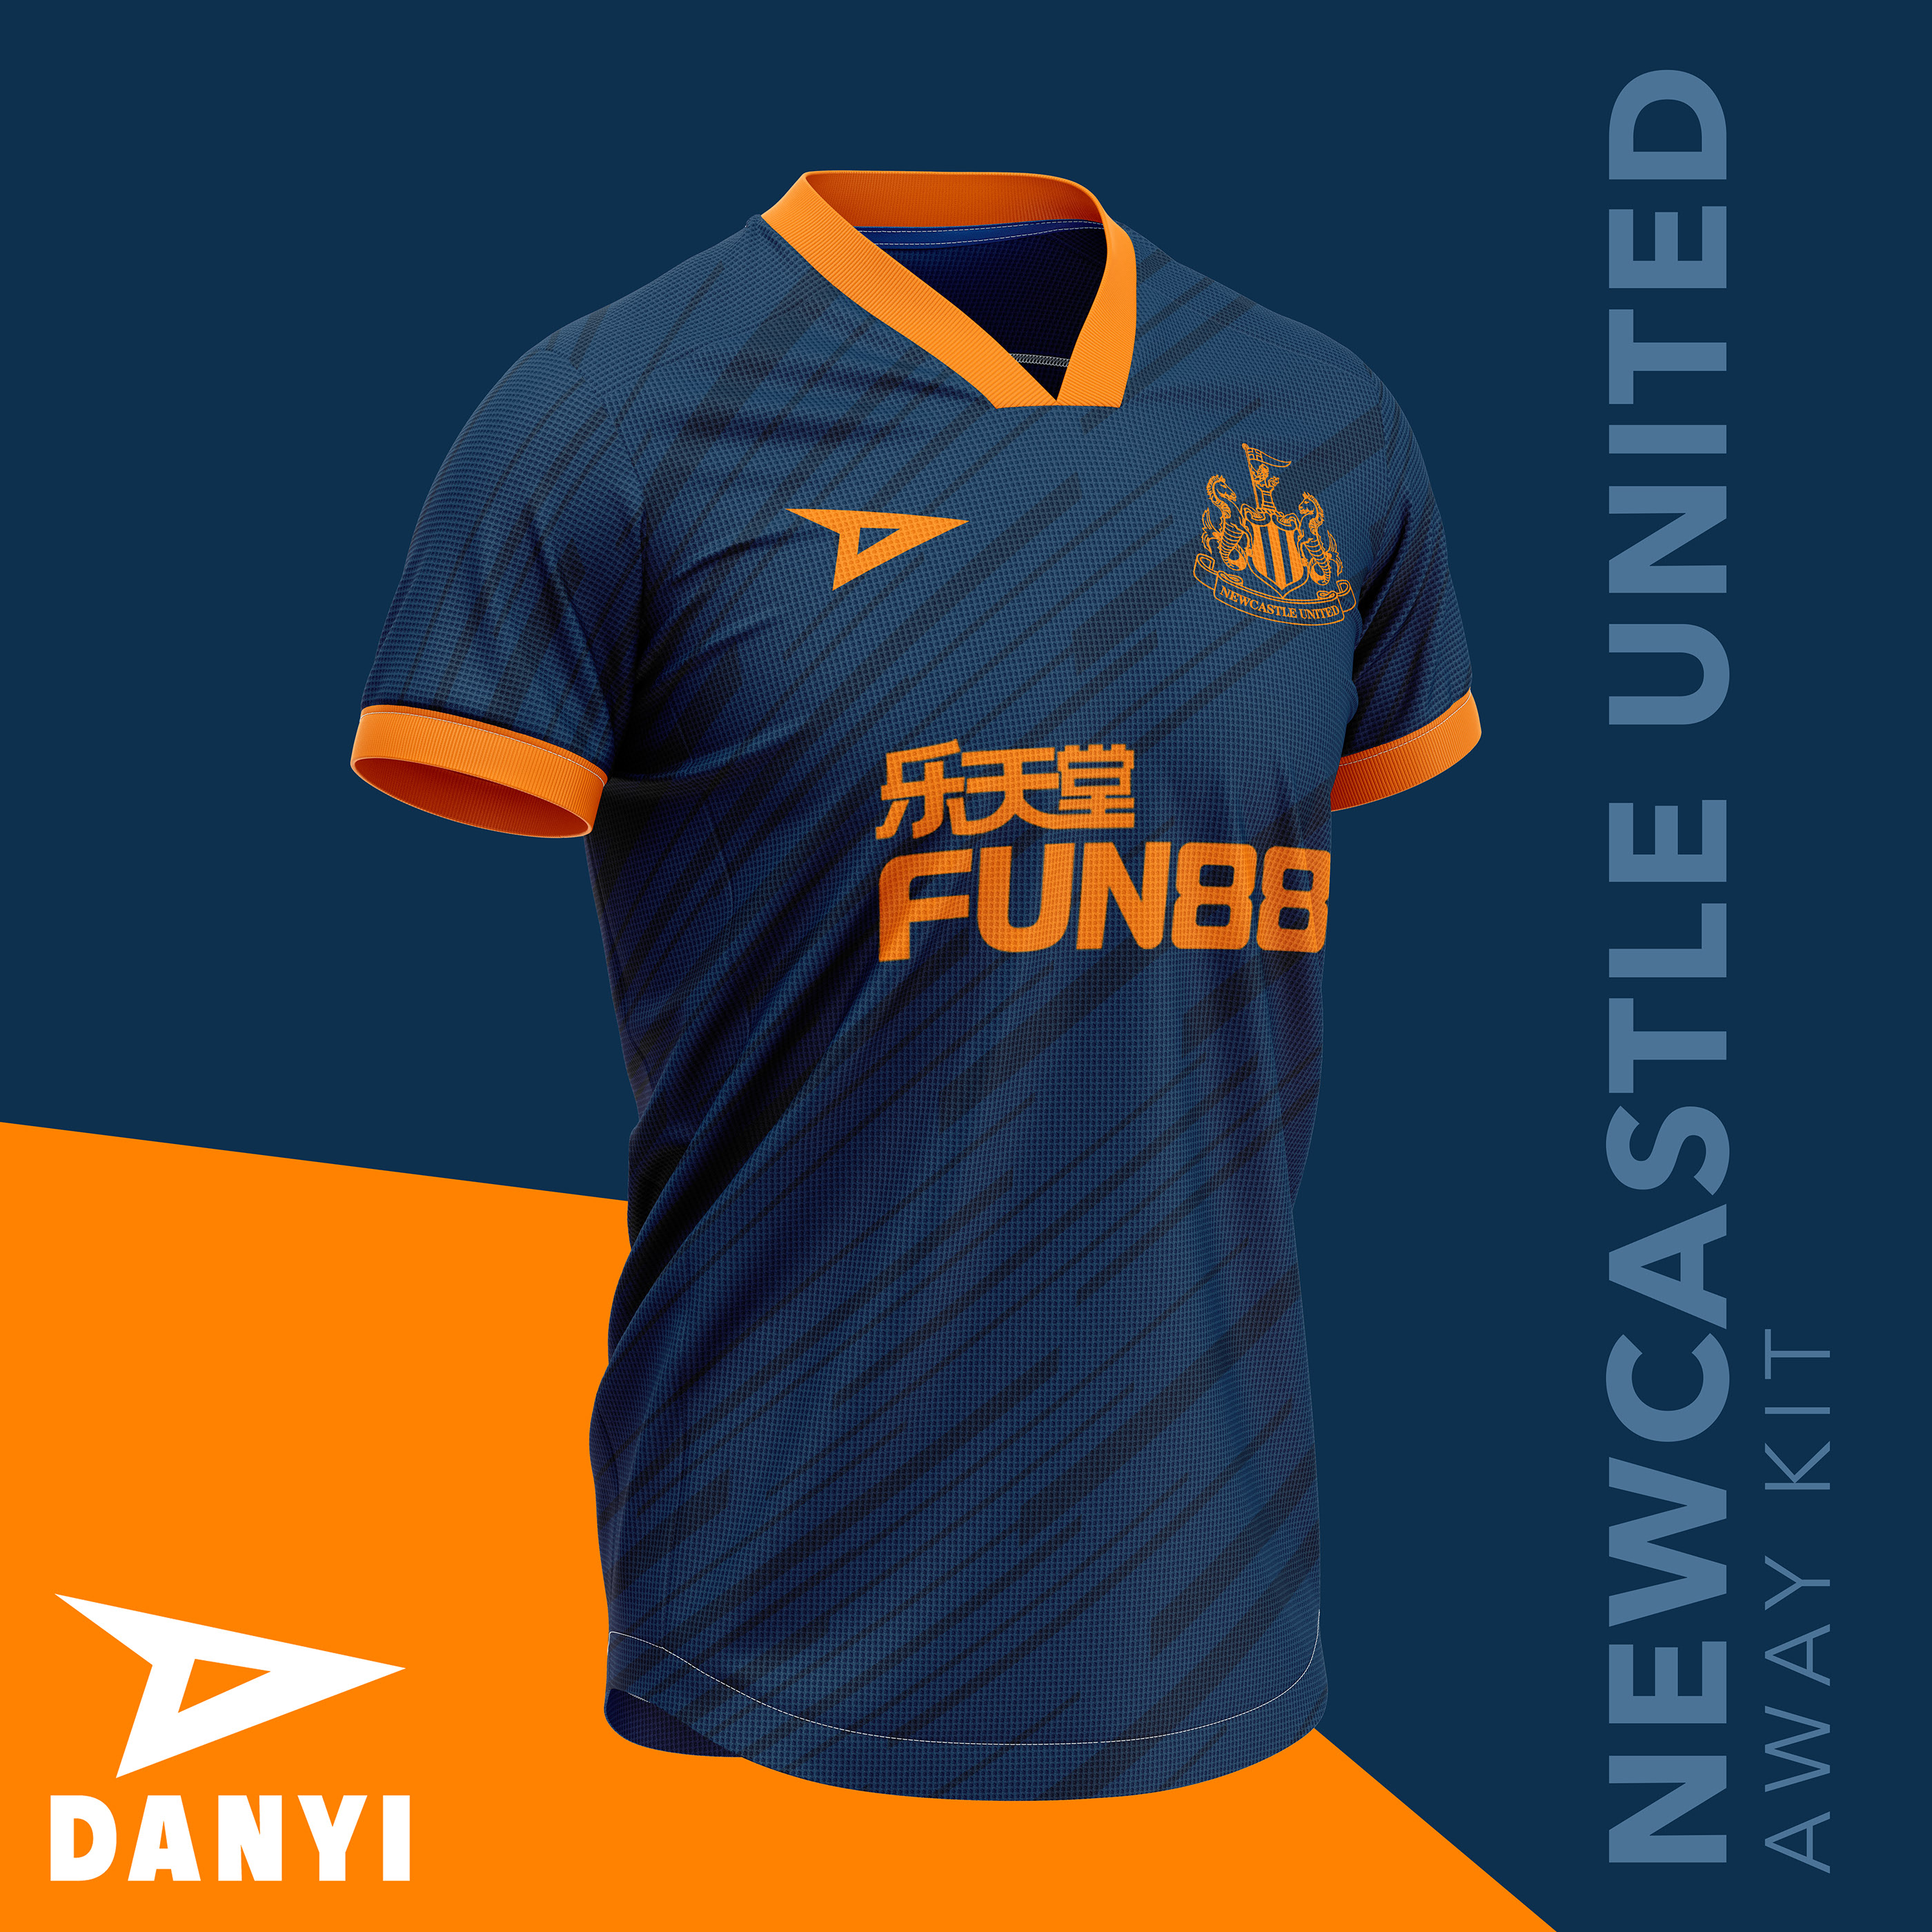 Danyi Football Kit Newcastle United Fc On Behance